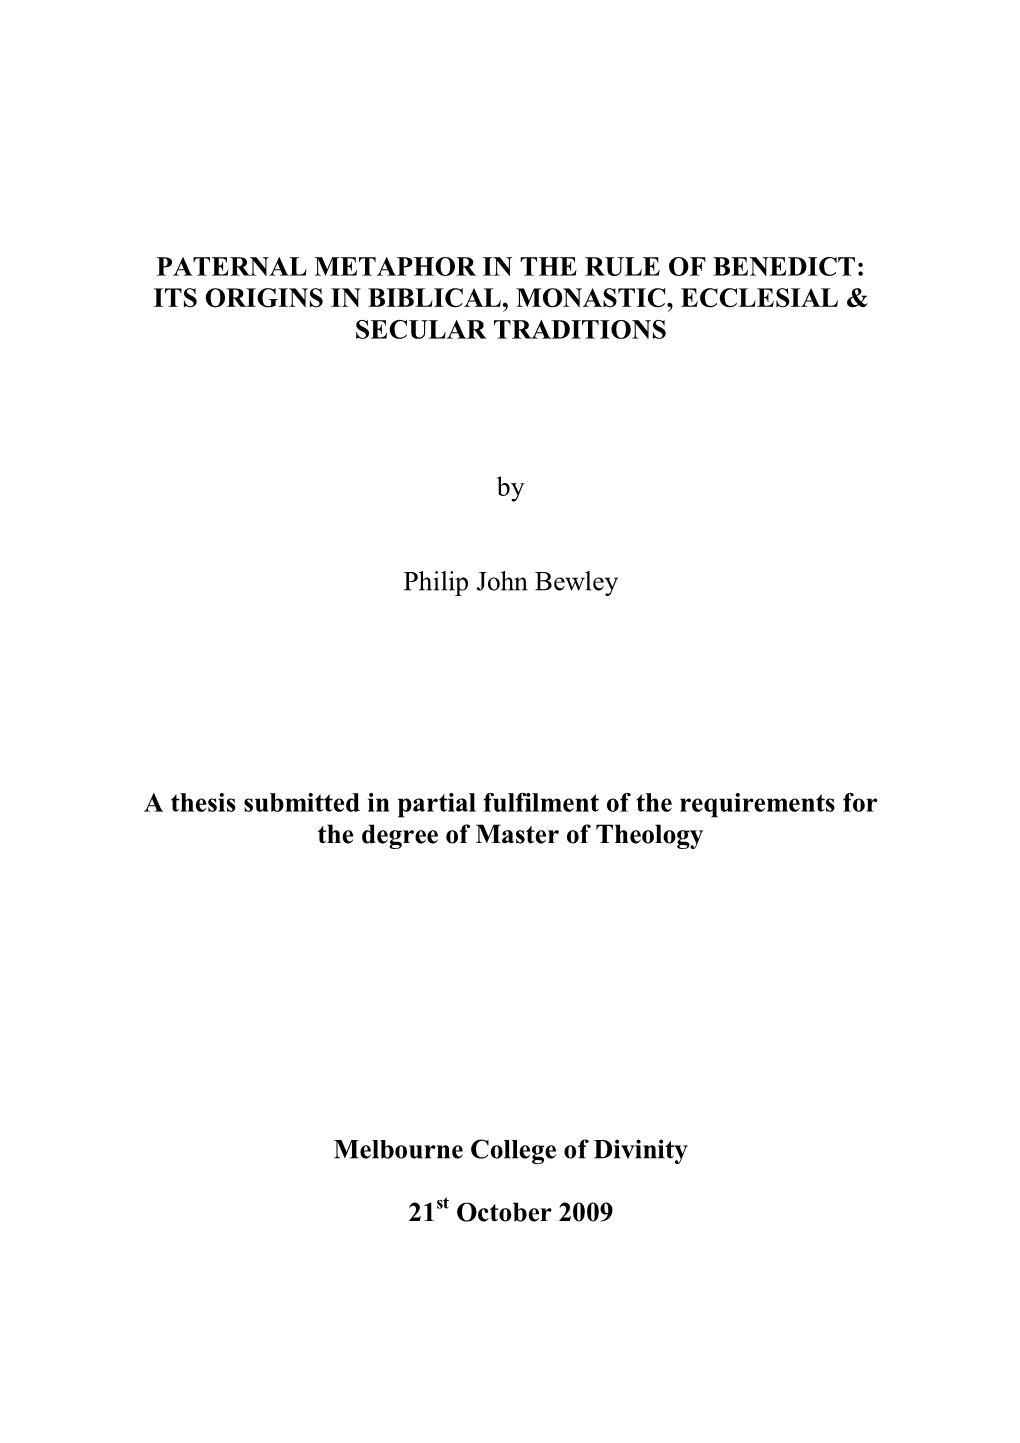 Paternal Metaphor in the Rule of Benedict: Its Origins in Biblical, Monastic, Ecclesial & Secular Traditions